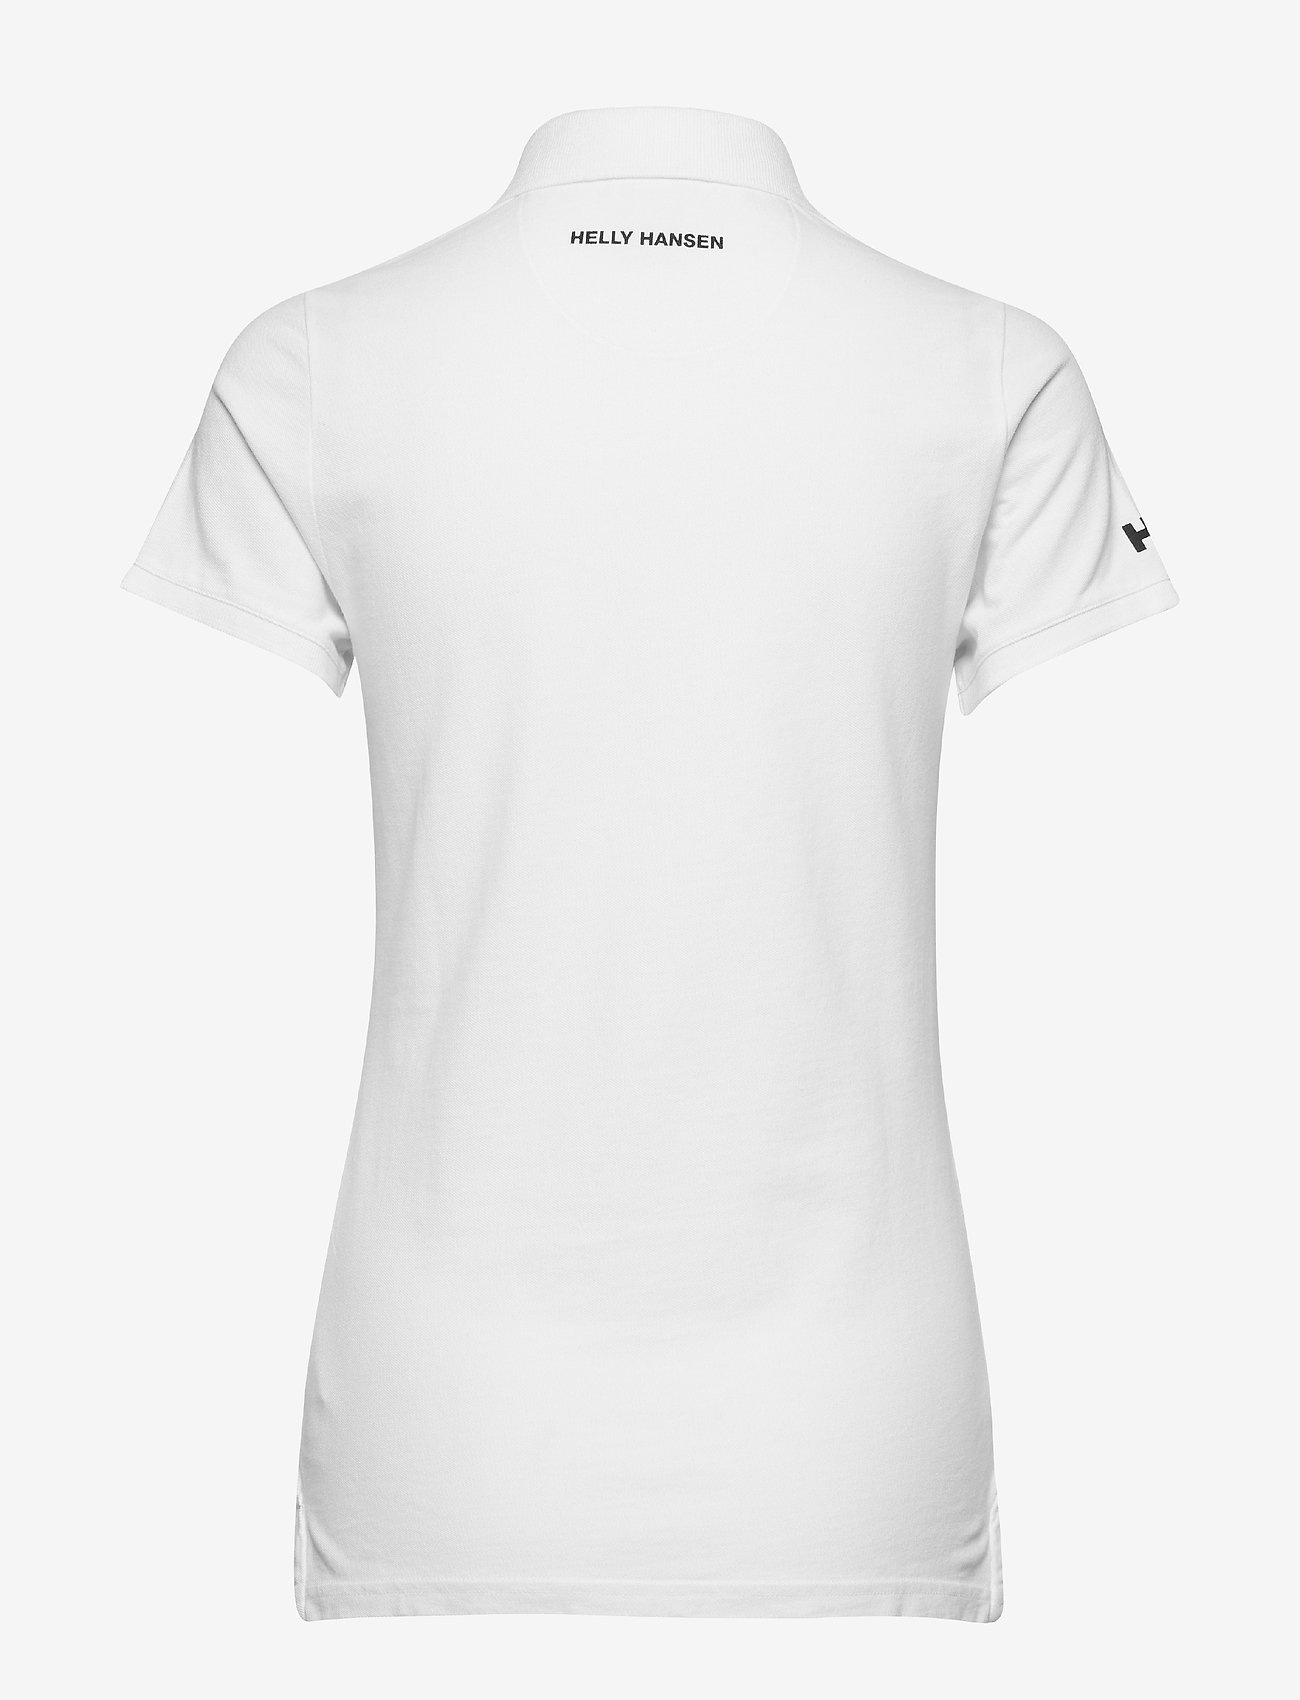 Helly Hansen - W CREW PIQUE 2 POLO - t-shirt & tops - white - 1